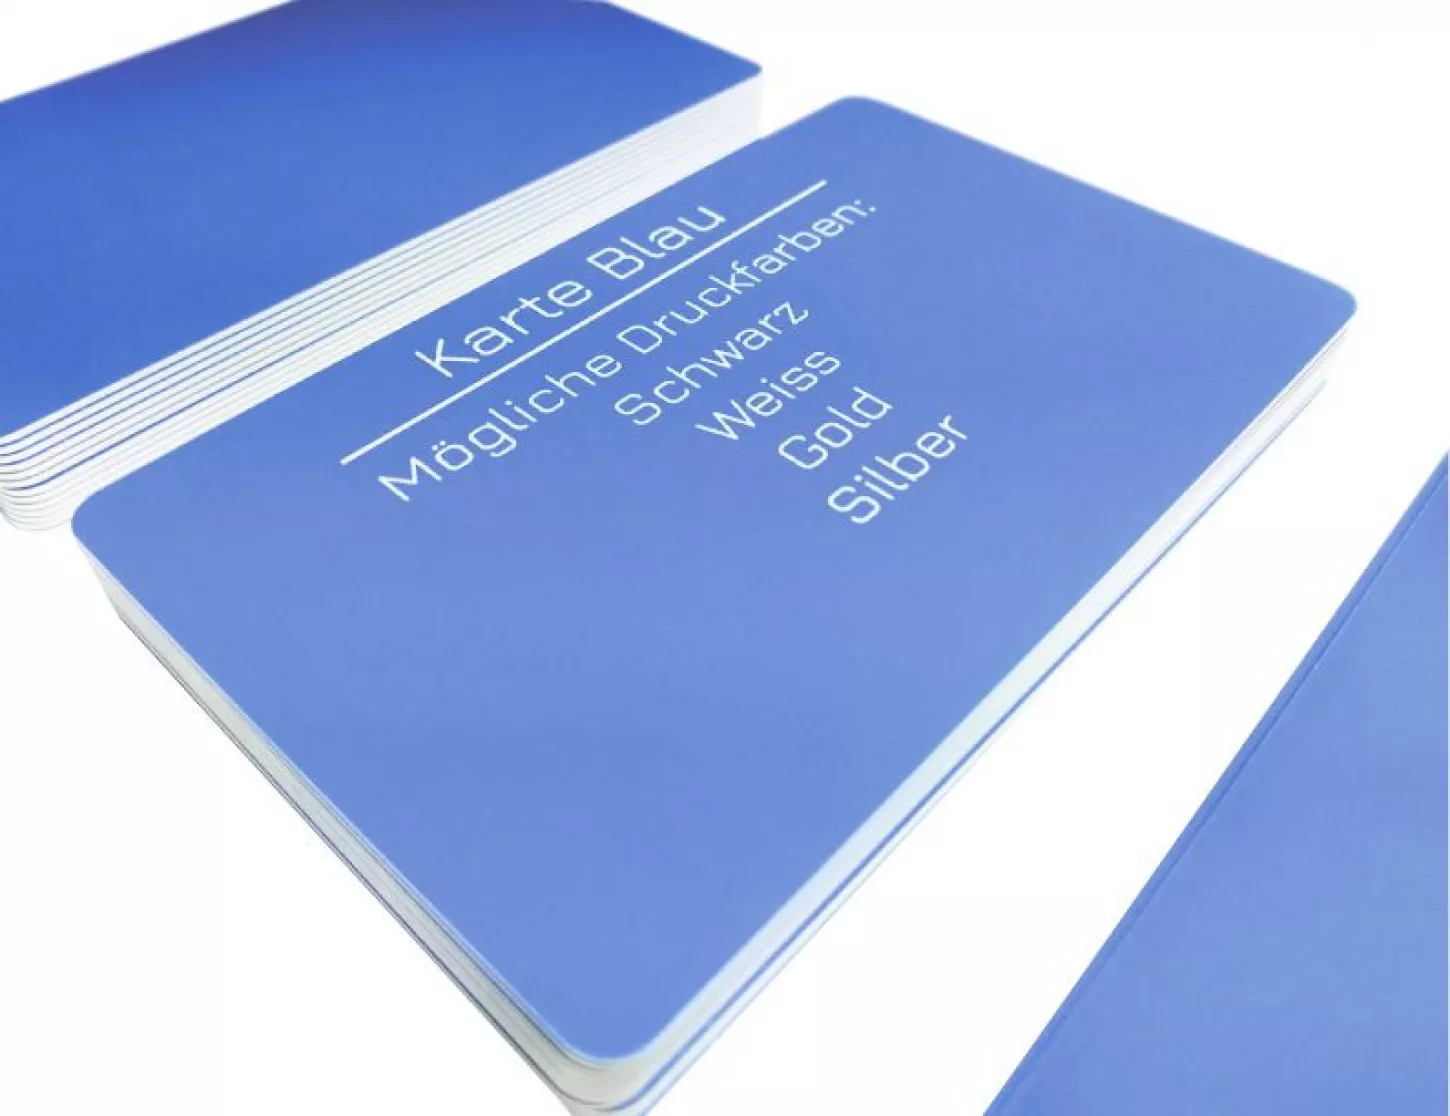 plastic card blue